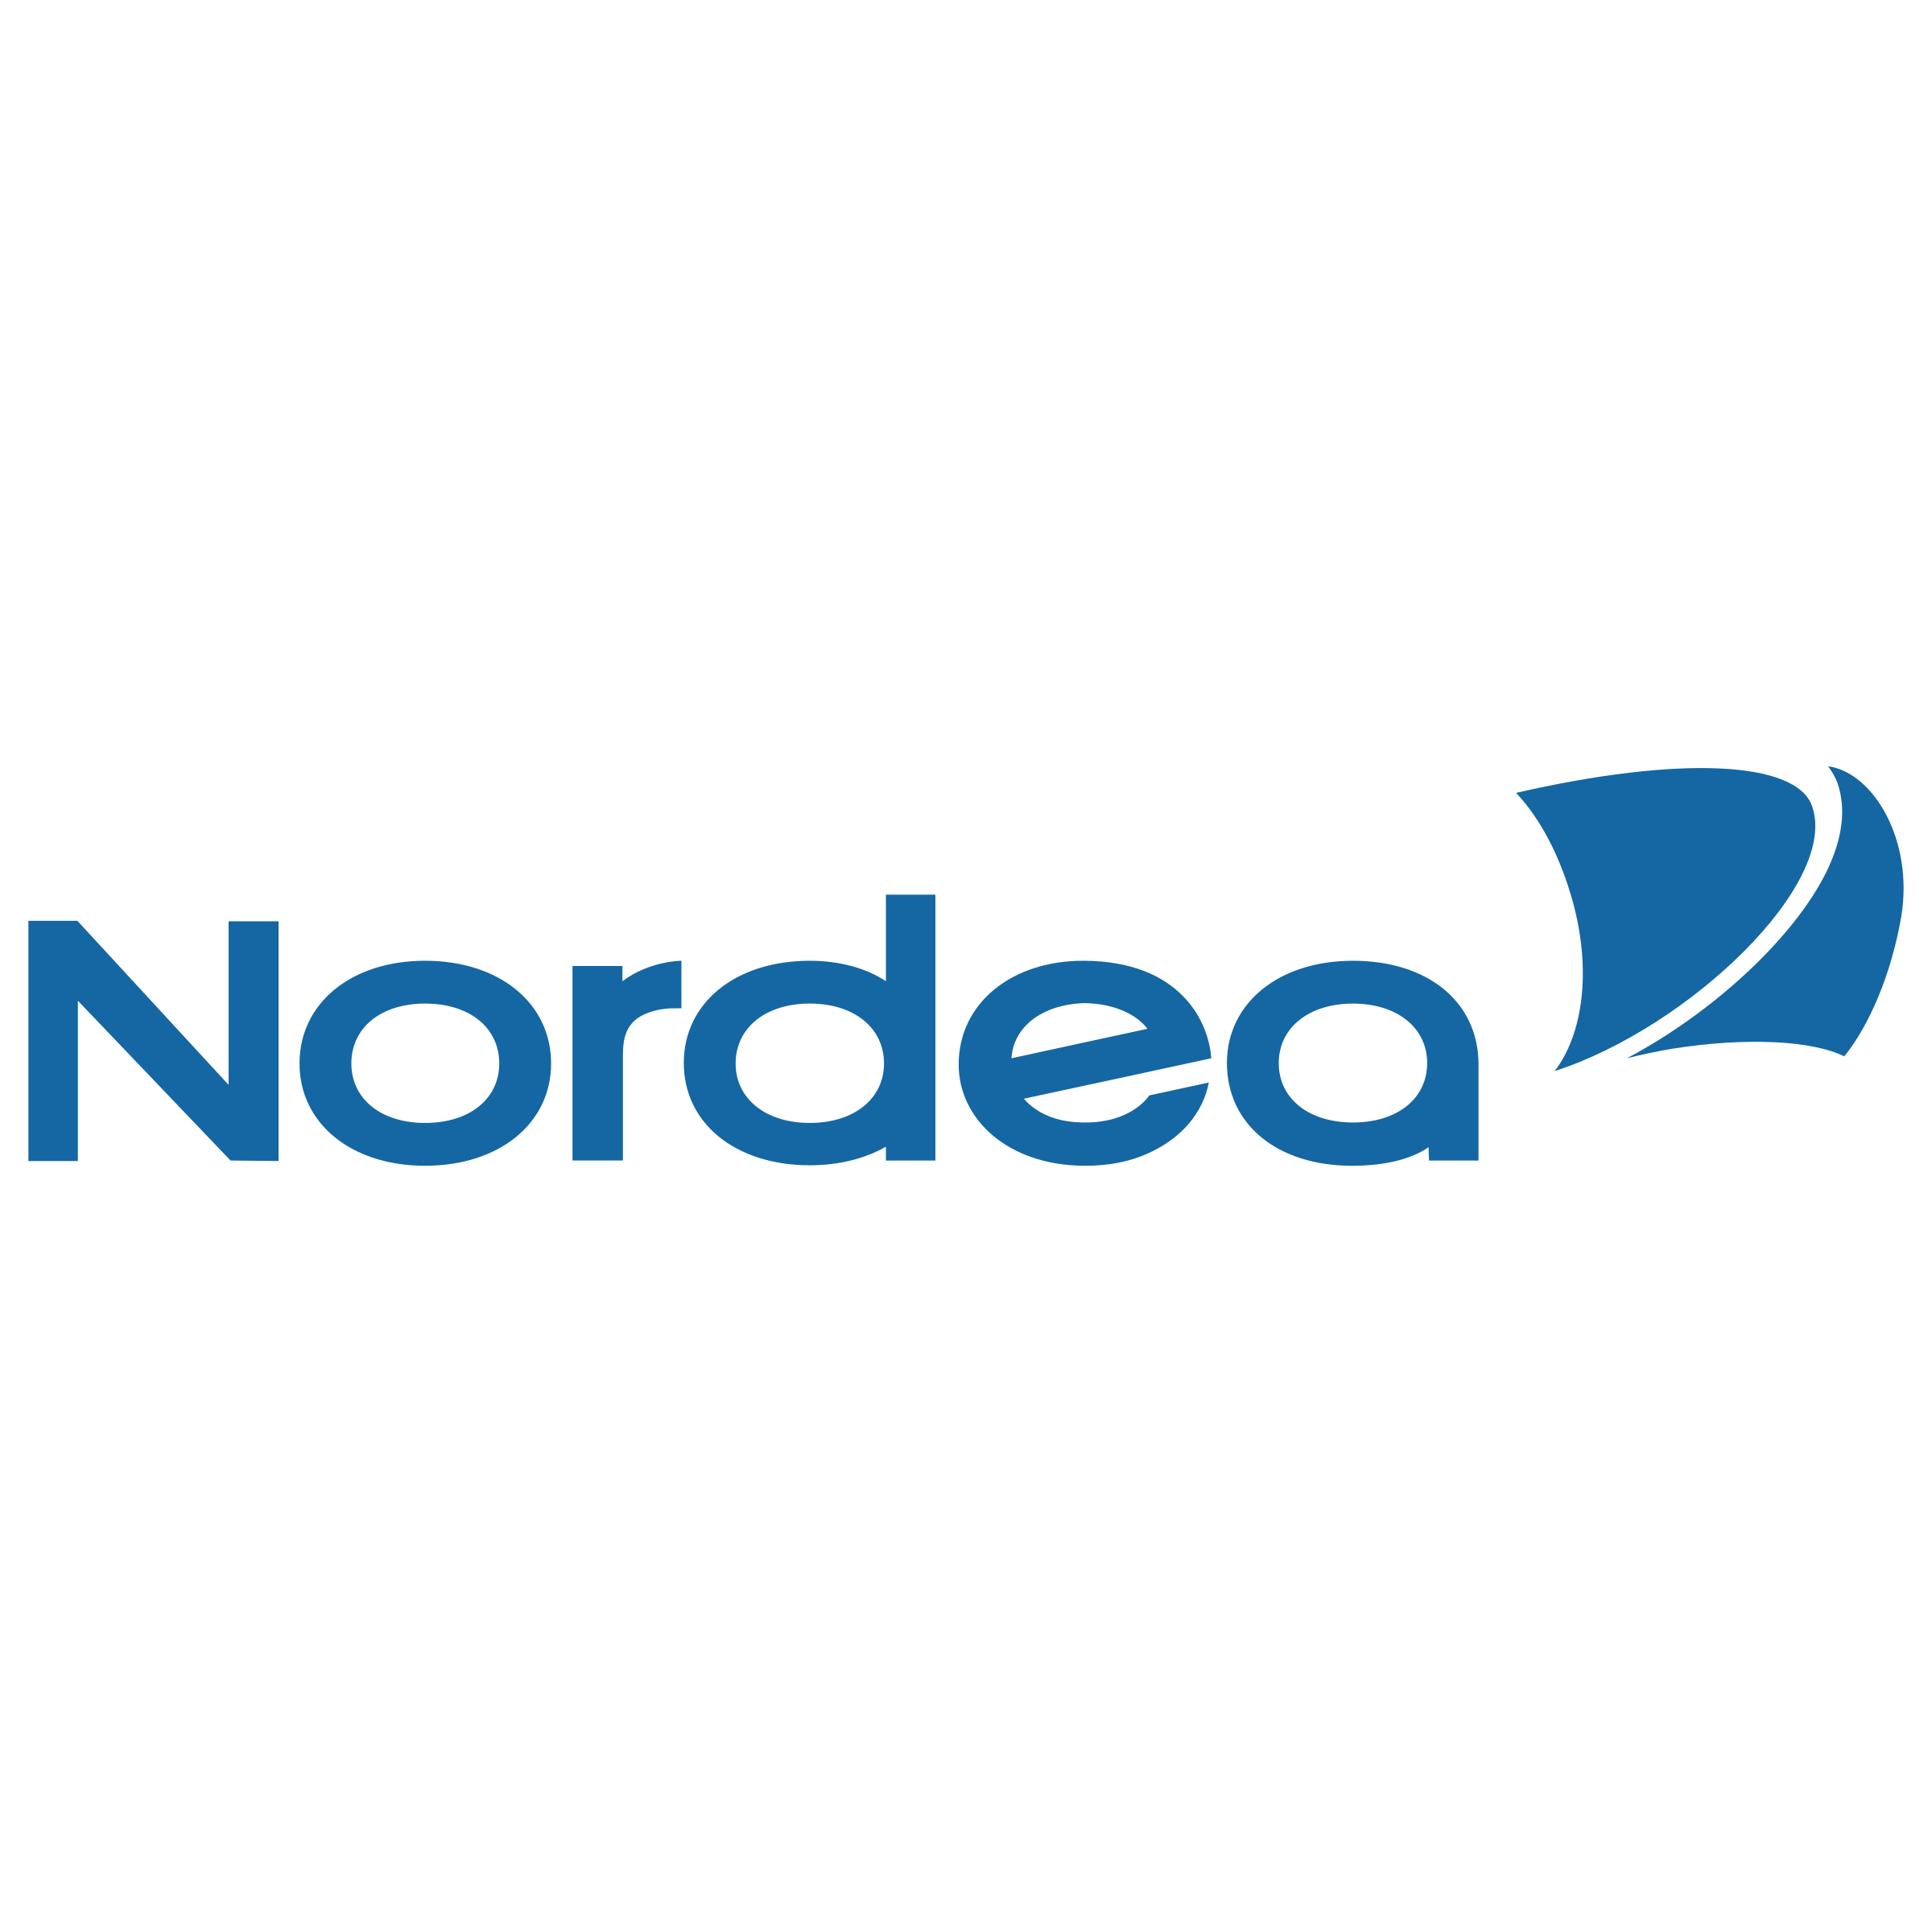 Nordea Logo - Nordea Logo PNG Transparent & SVG Vector - Freebie Supply